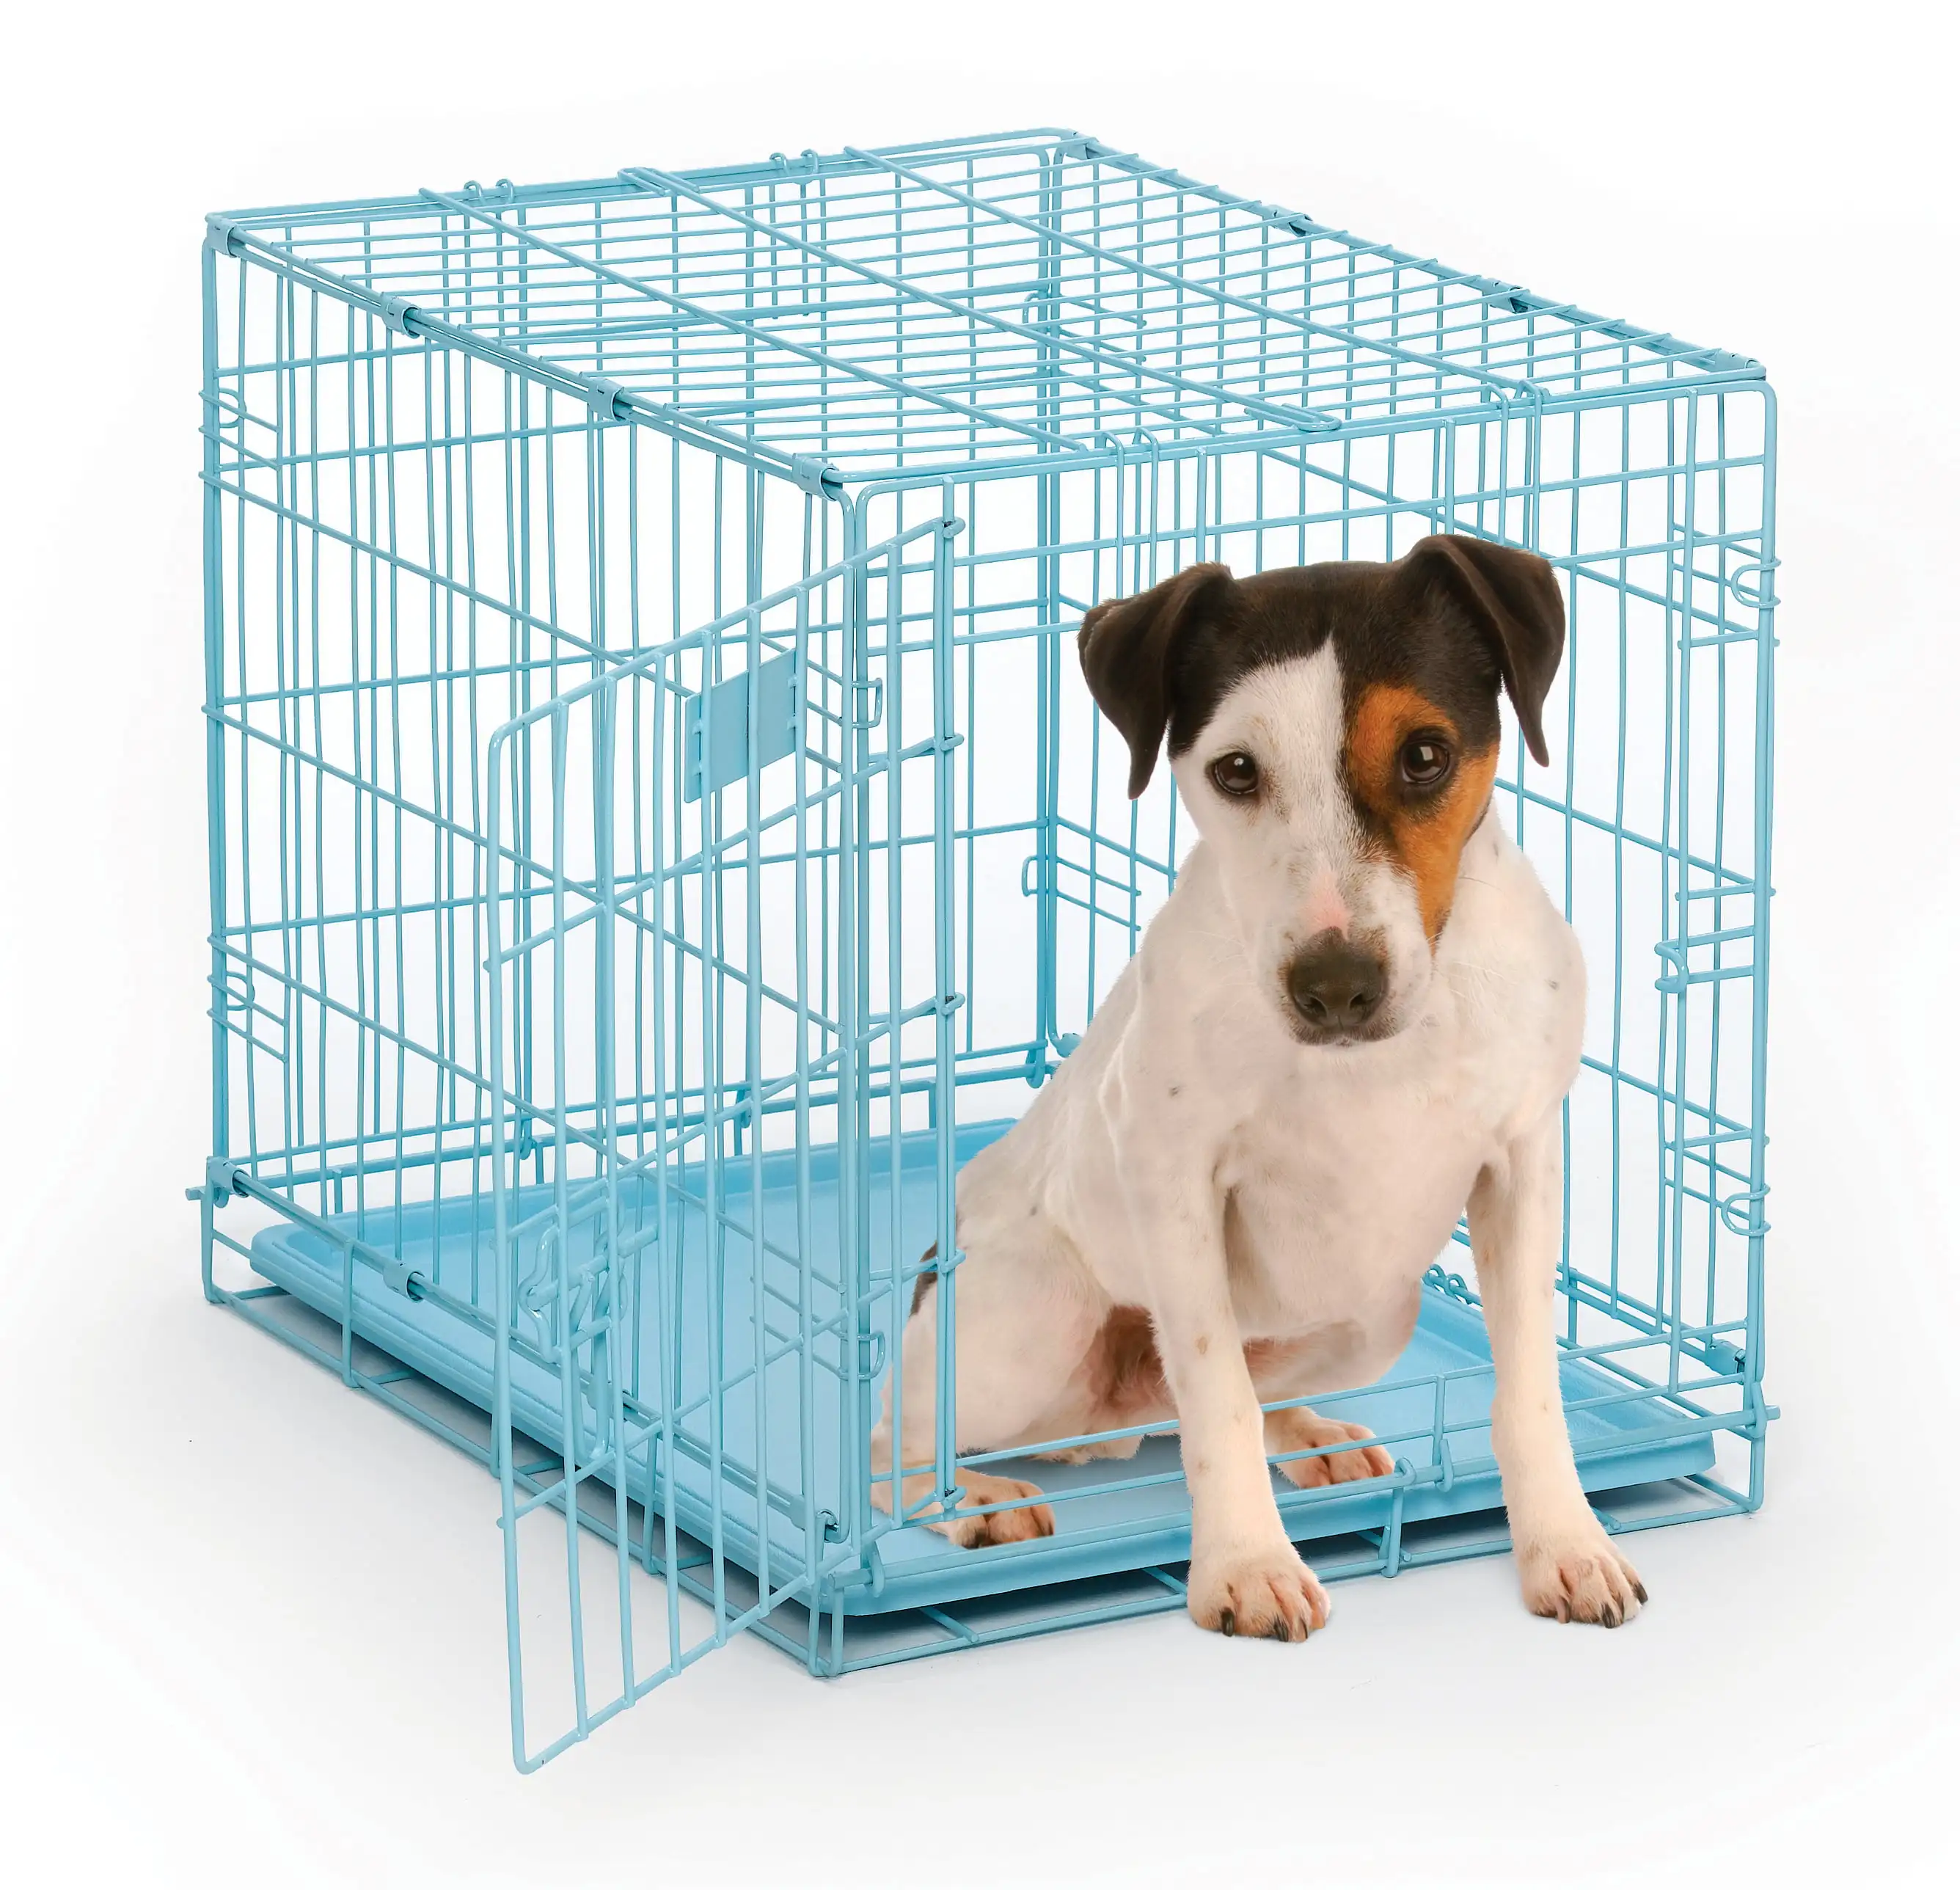 https://ae01.alicdn.com/kf/Sbcb3f326208849d19f98ab35ab0fc5539/Folding-Metal-Dog-Crate-Divider-Panel-Floor-Protecting-Feet-Toy-Dog-Breed-Dog-Supplies-Dog-Carrier.jpg